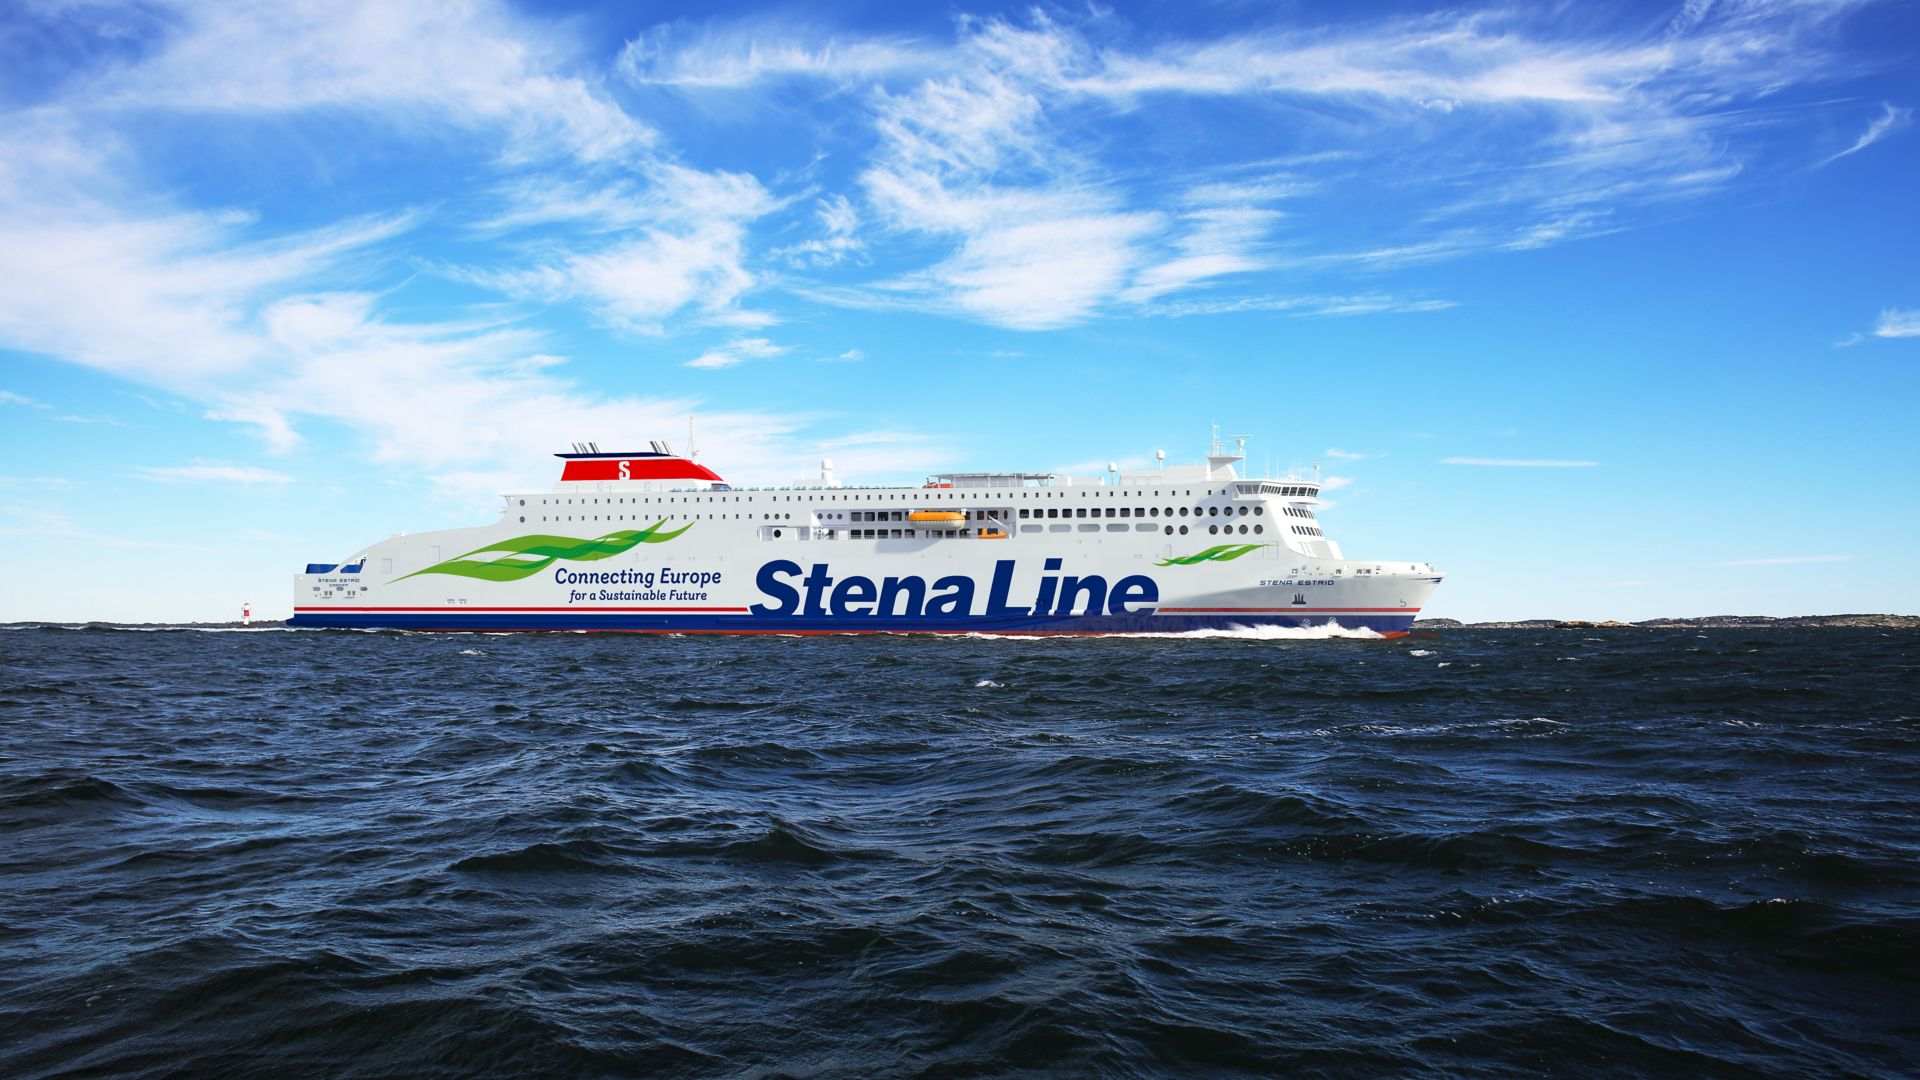 Stena Estrid at sea